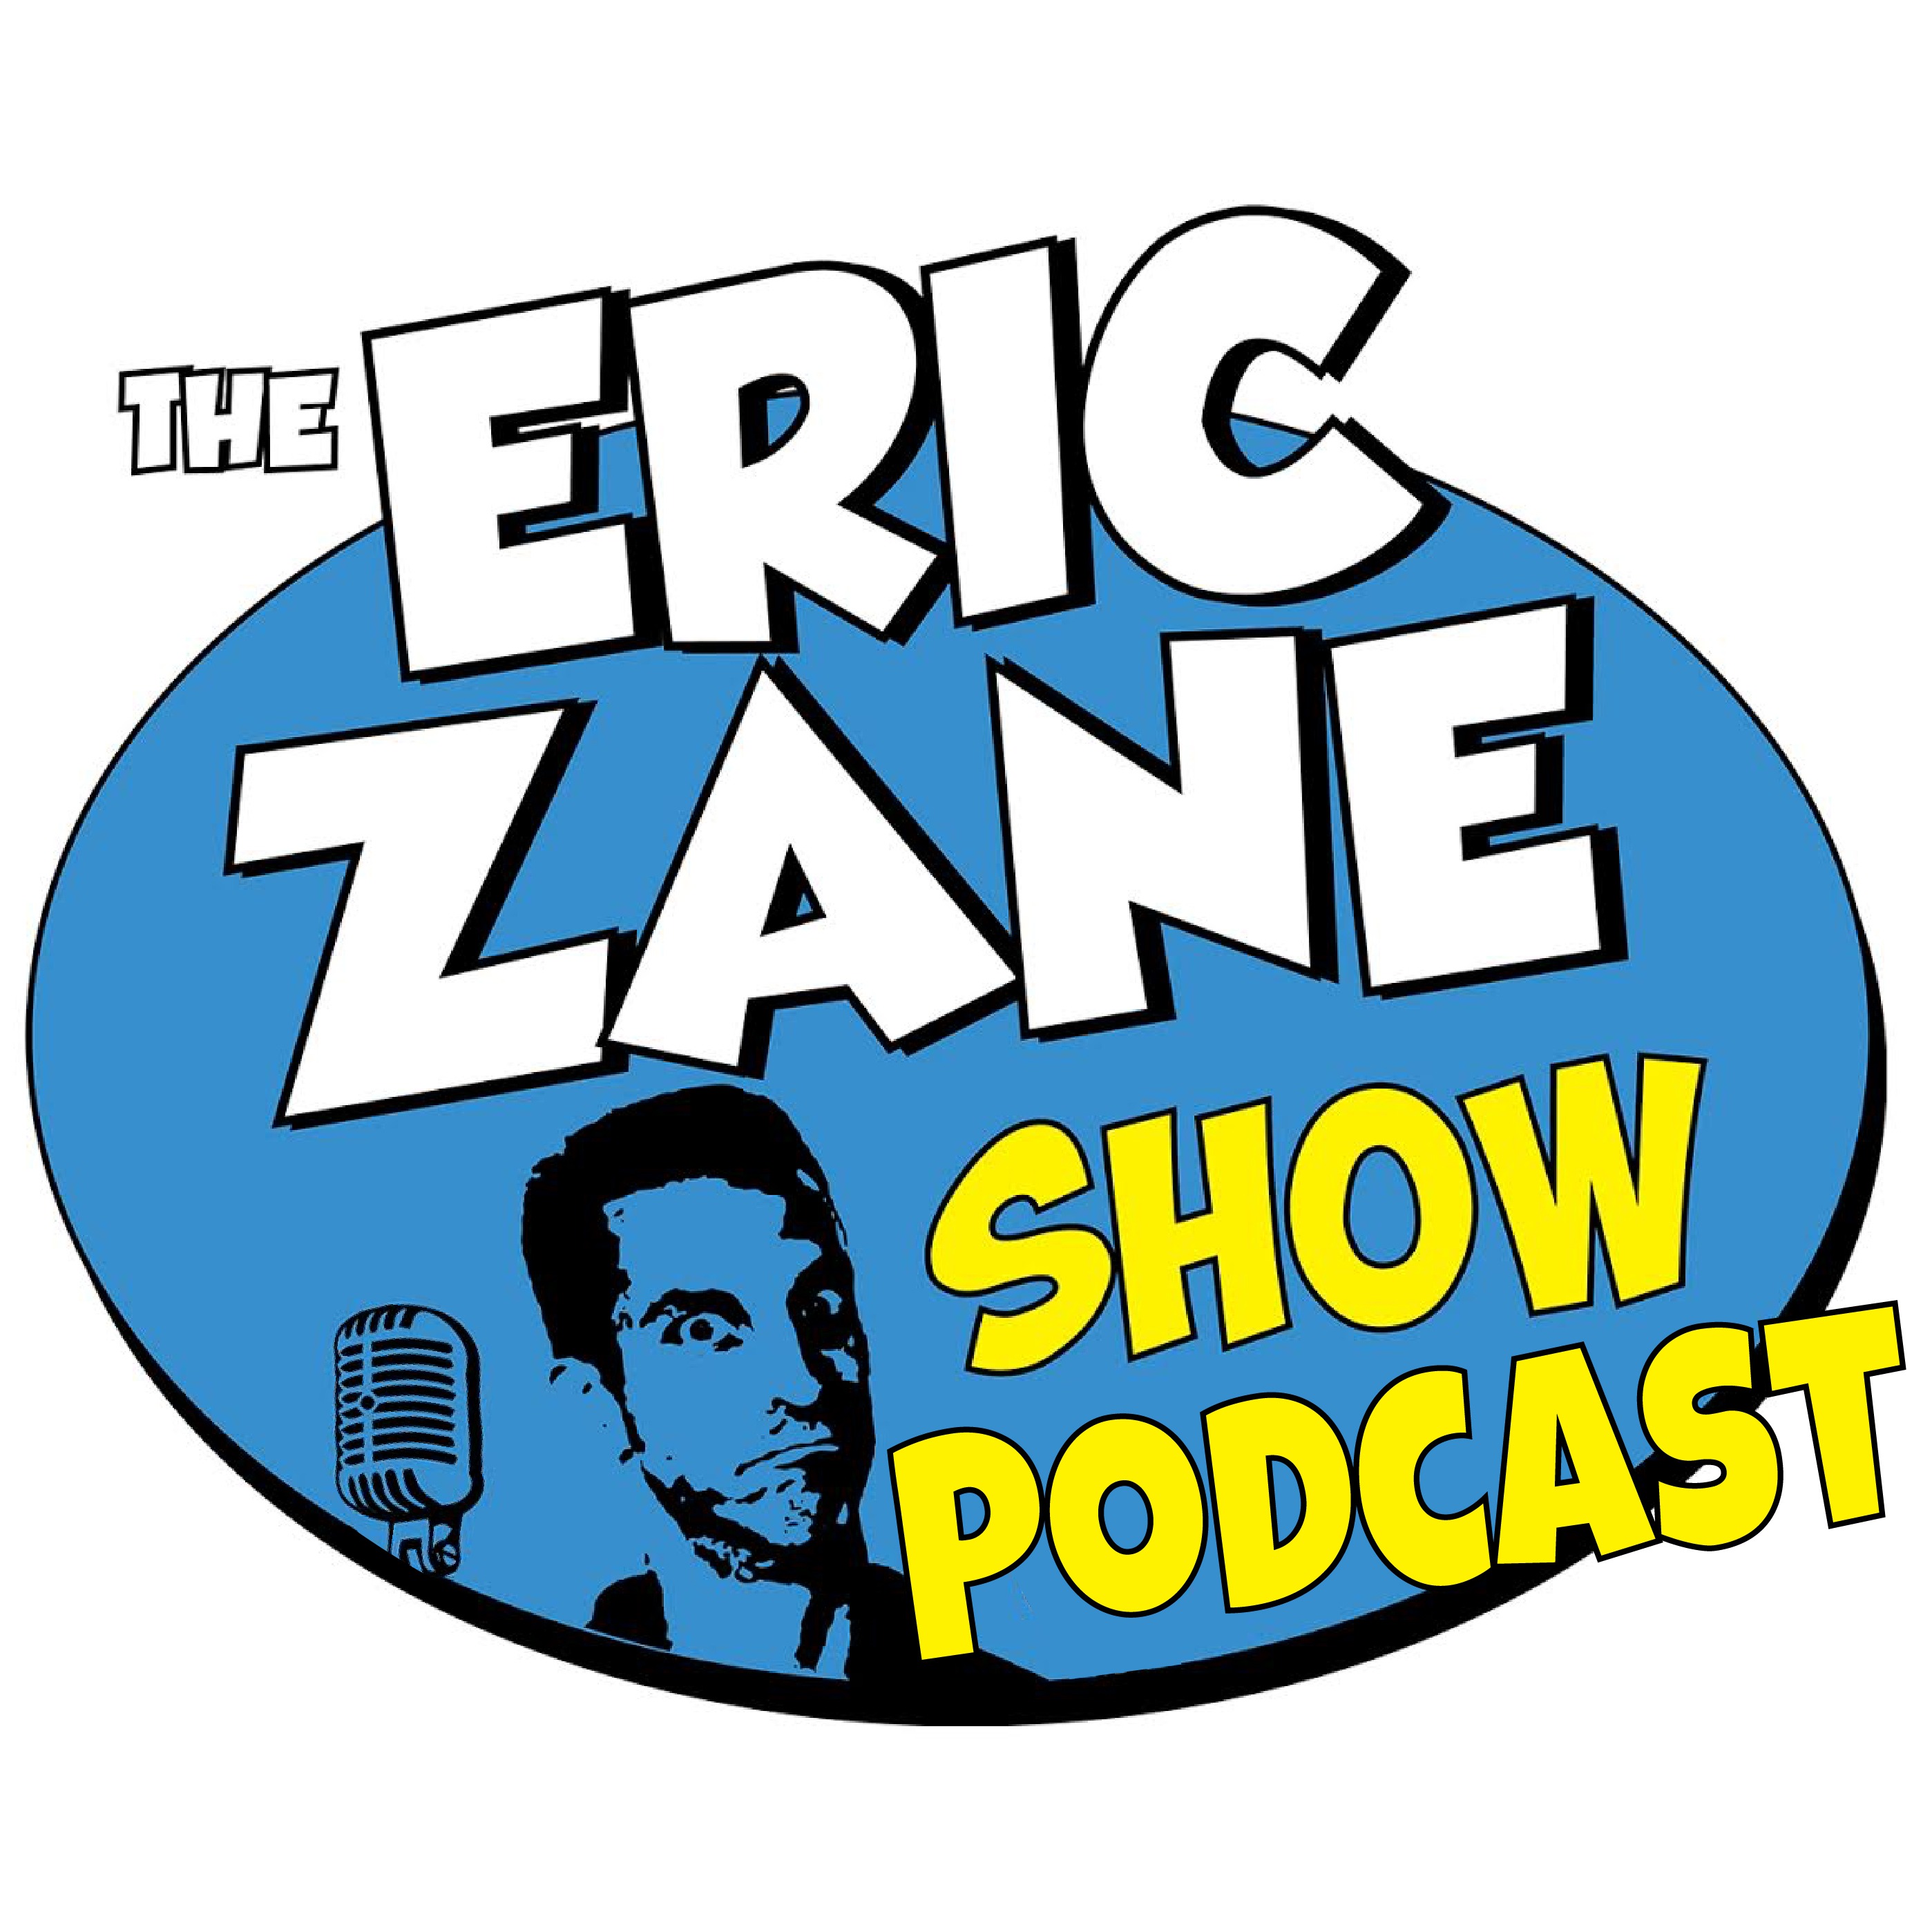 Eric Zane Show Podcast 986 - The M&M's 